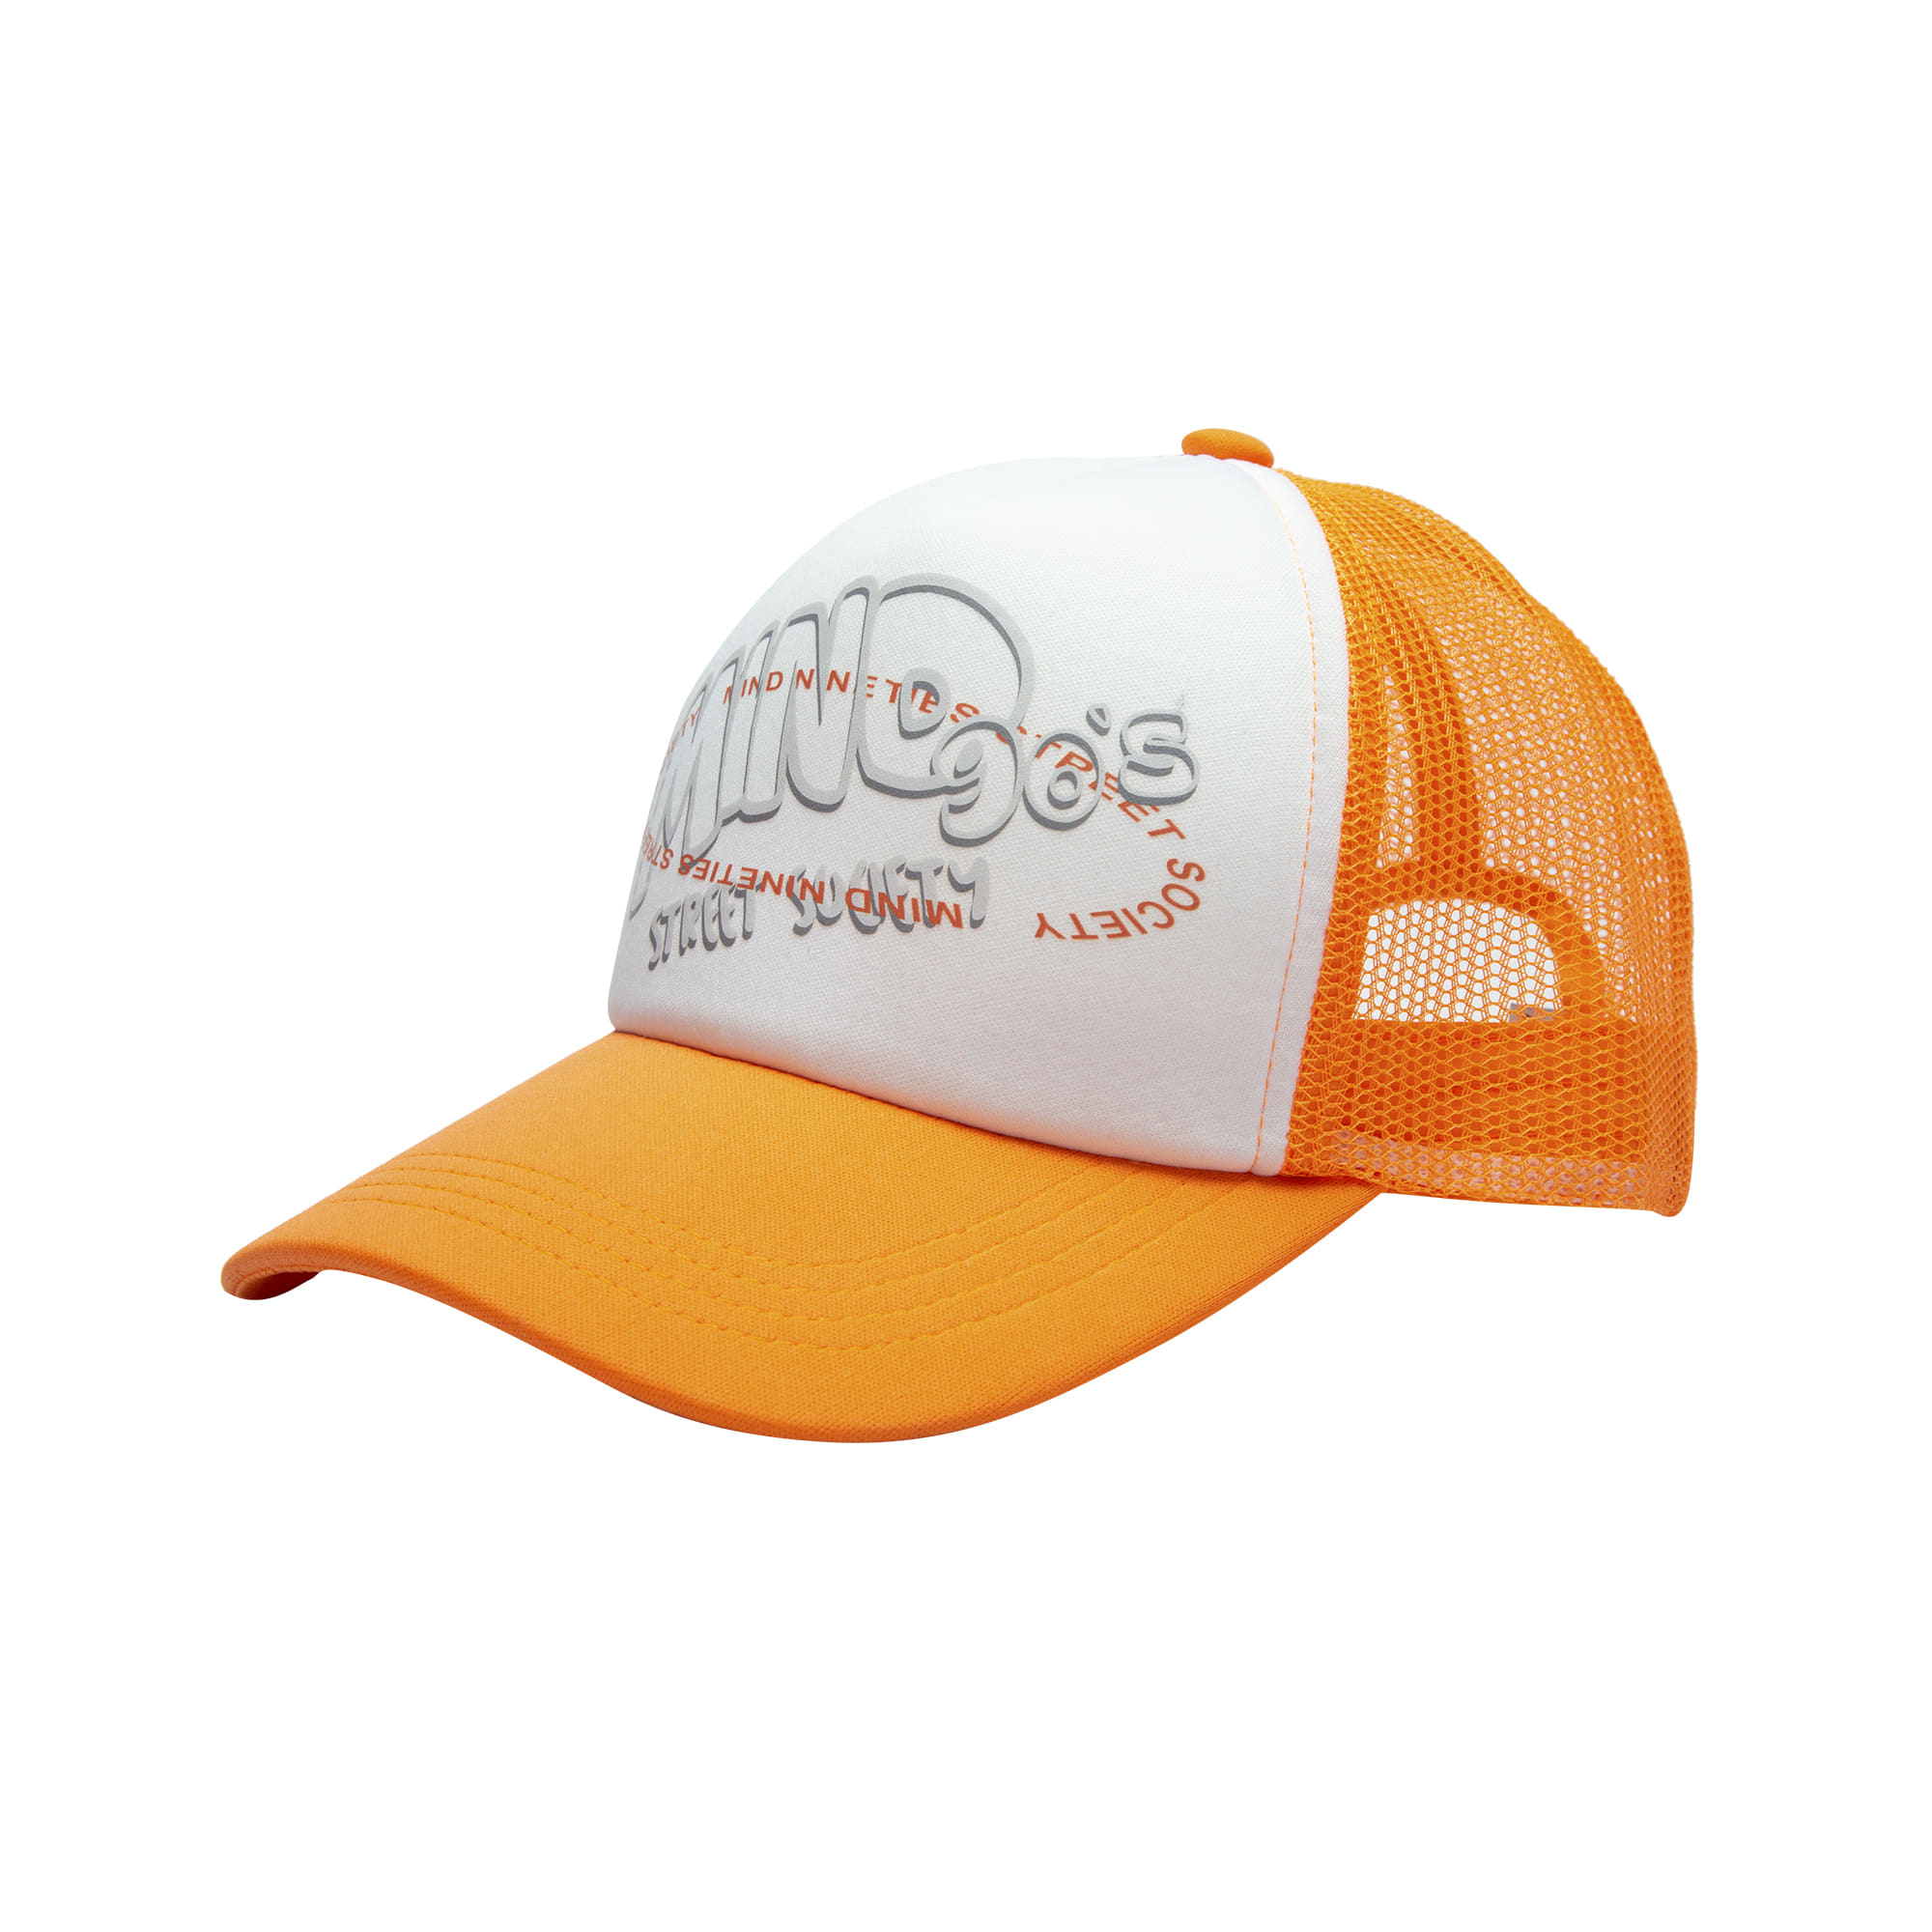 intelligence Mesh cap (Orange/ white)